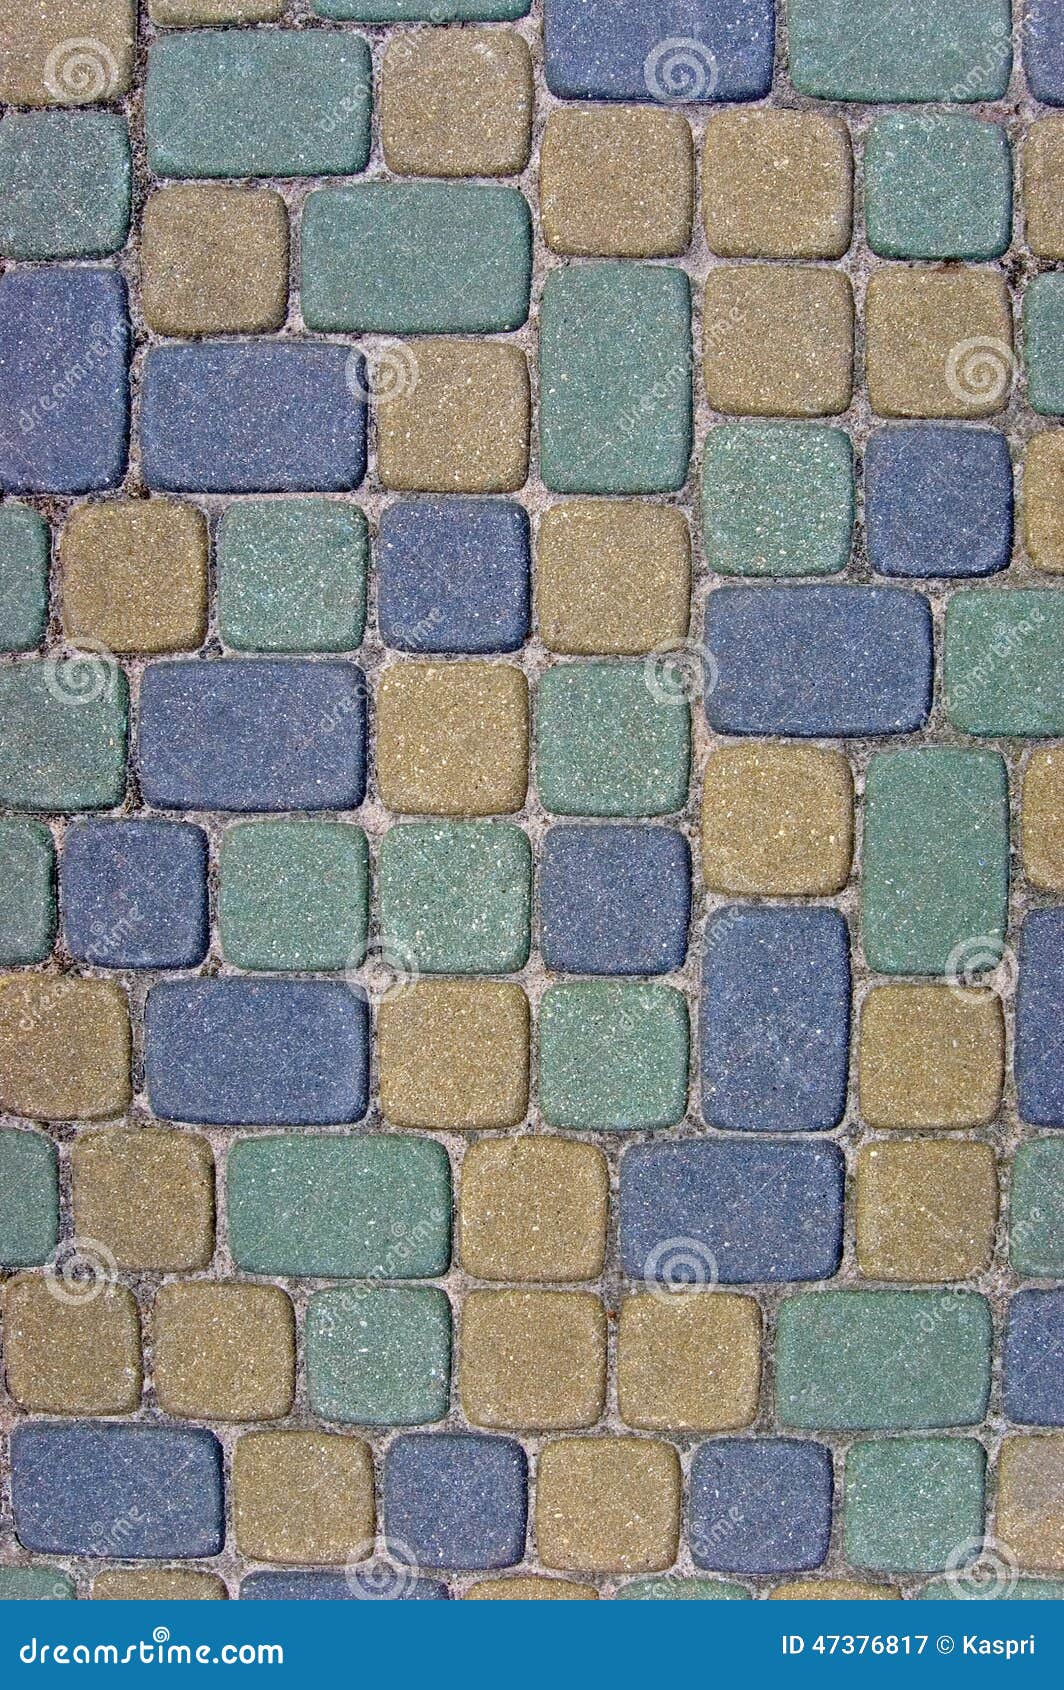 cobblestone texture background closeup, vertical colorful green, yellow, blue, tan, grey, gray, beige ashlar